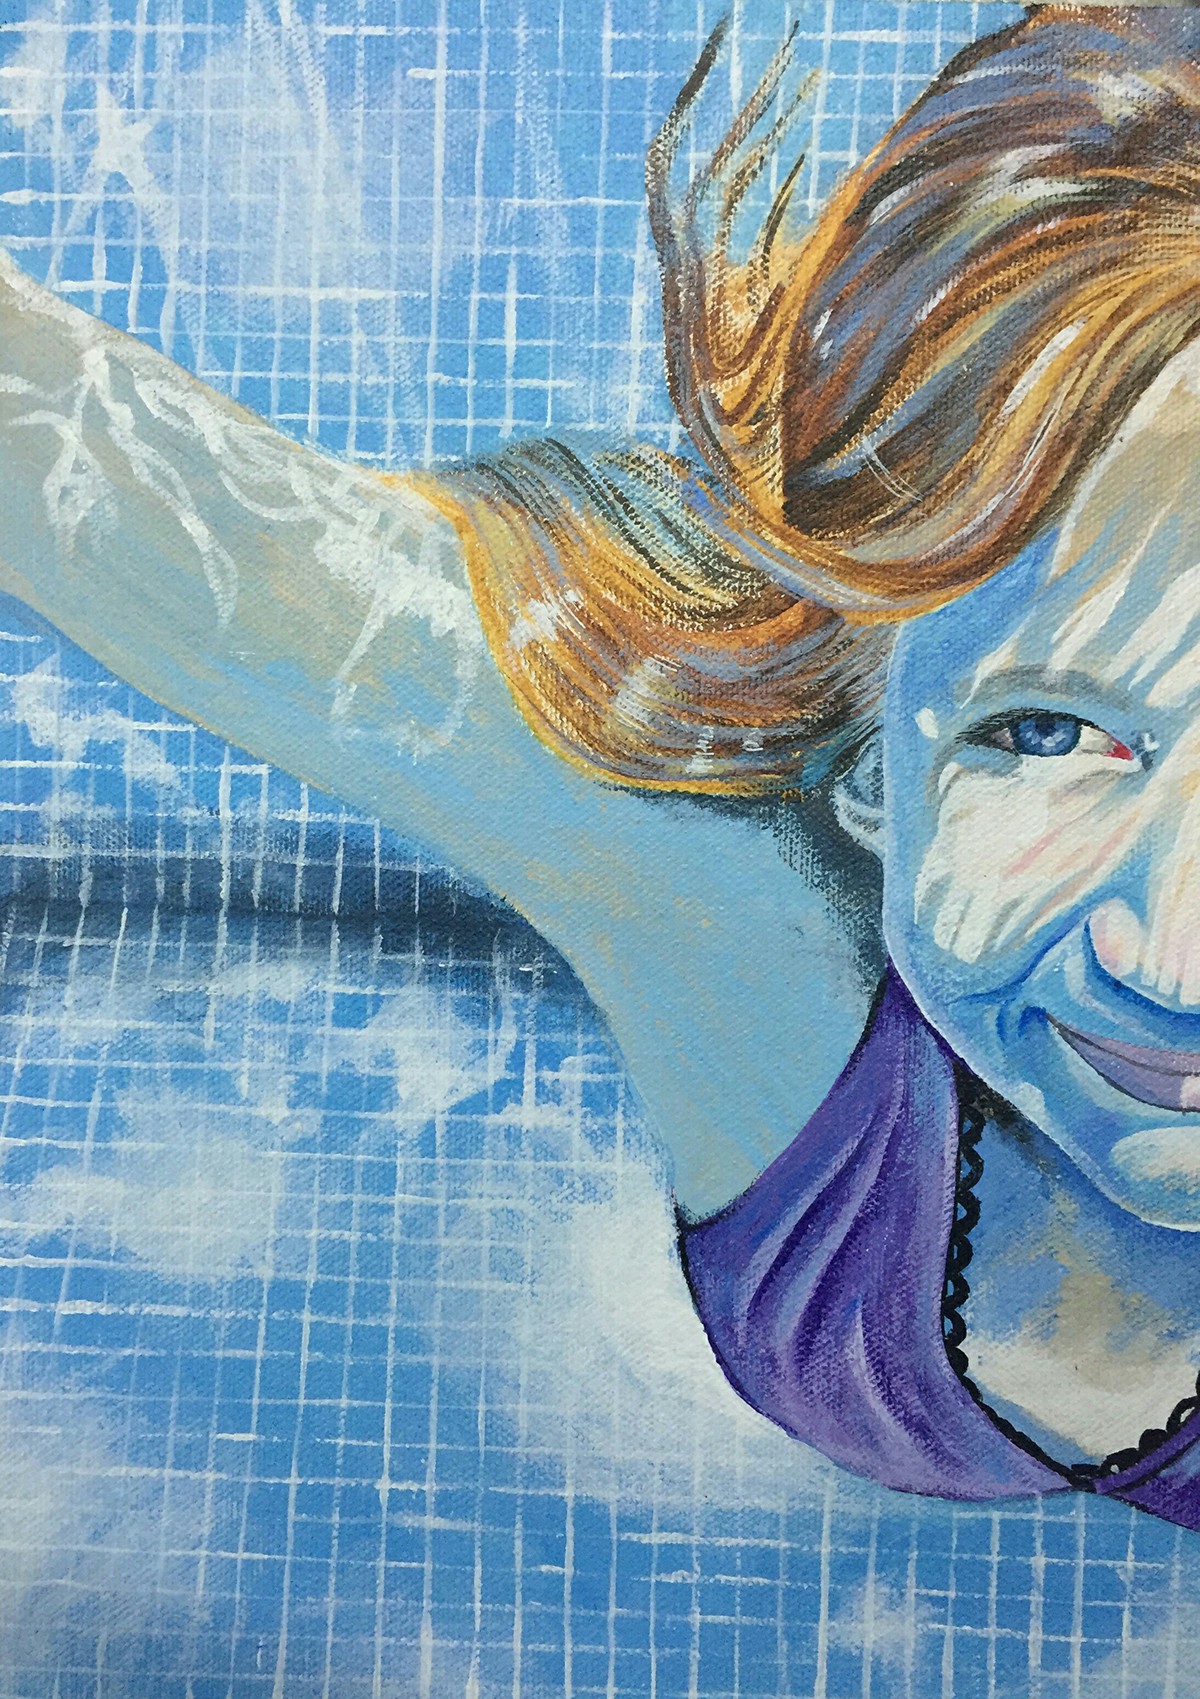 swimming girl acrylic paint canvas sasmazoom mazoom colorful